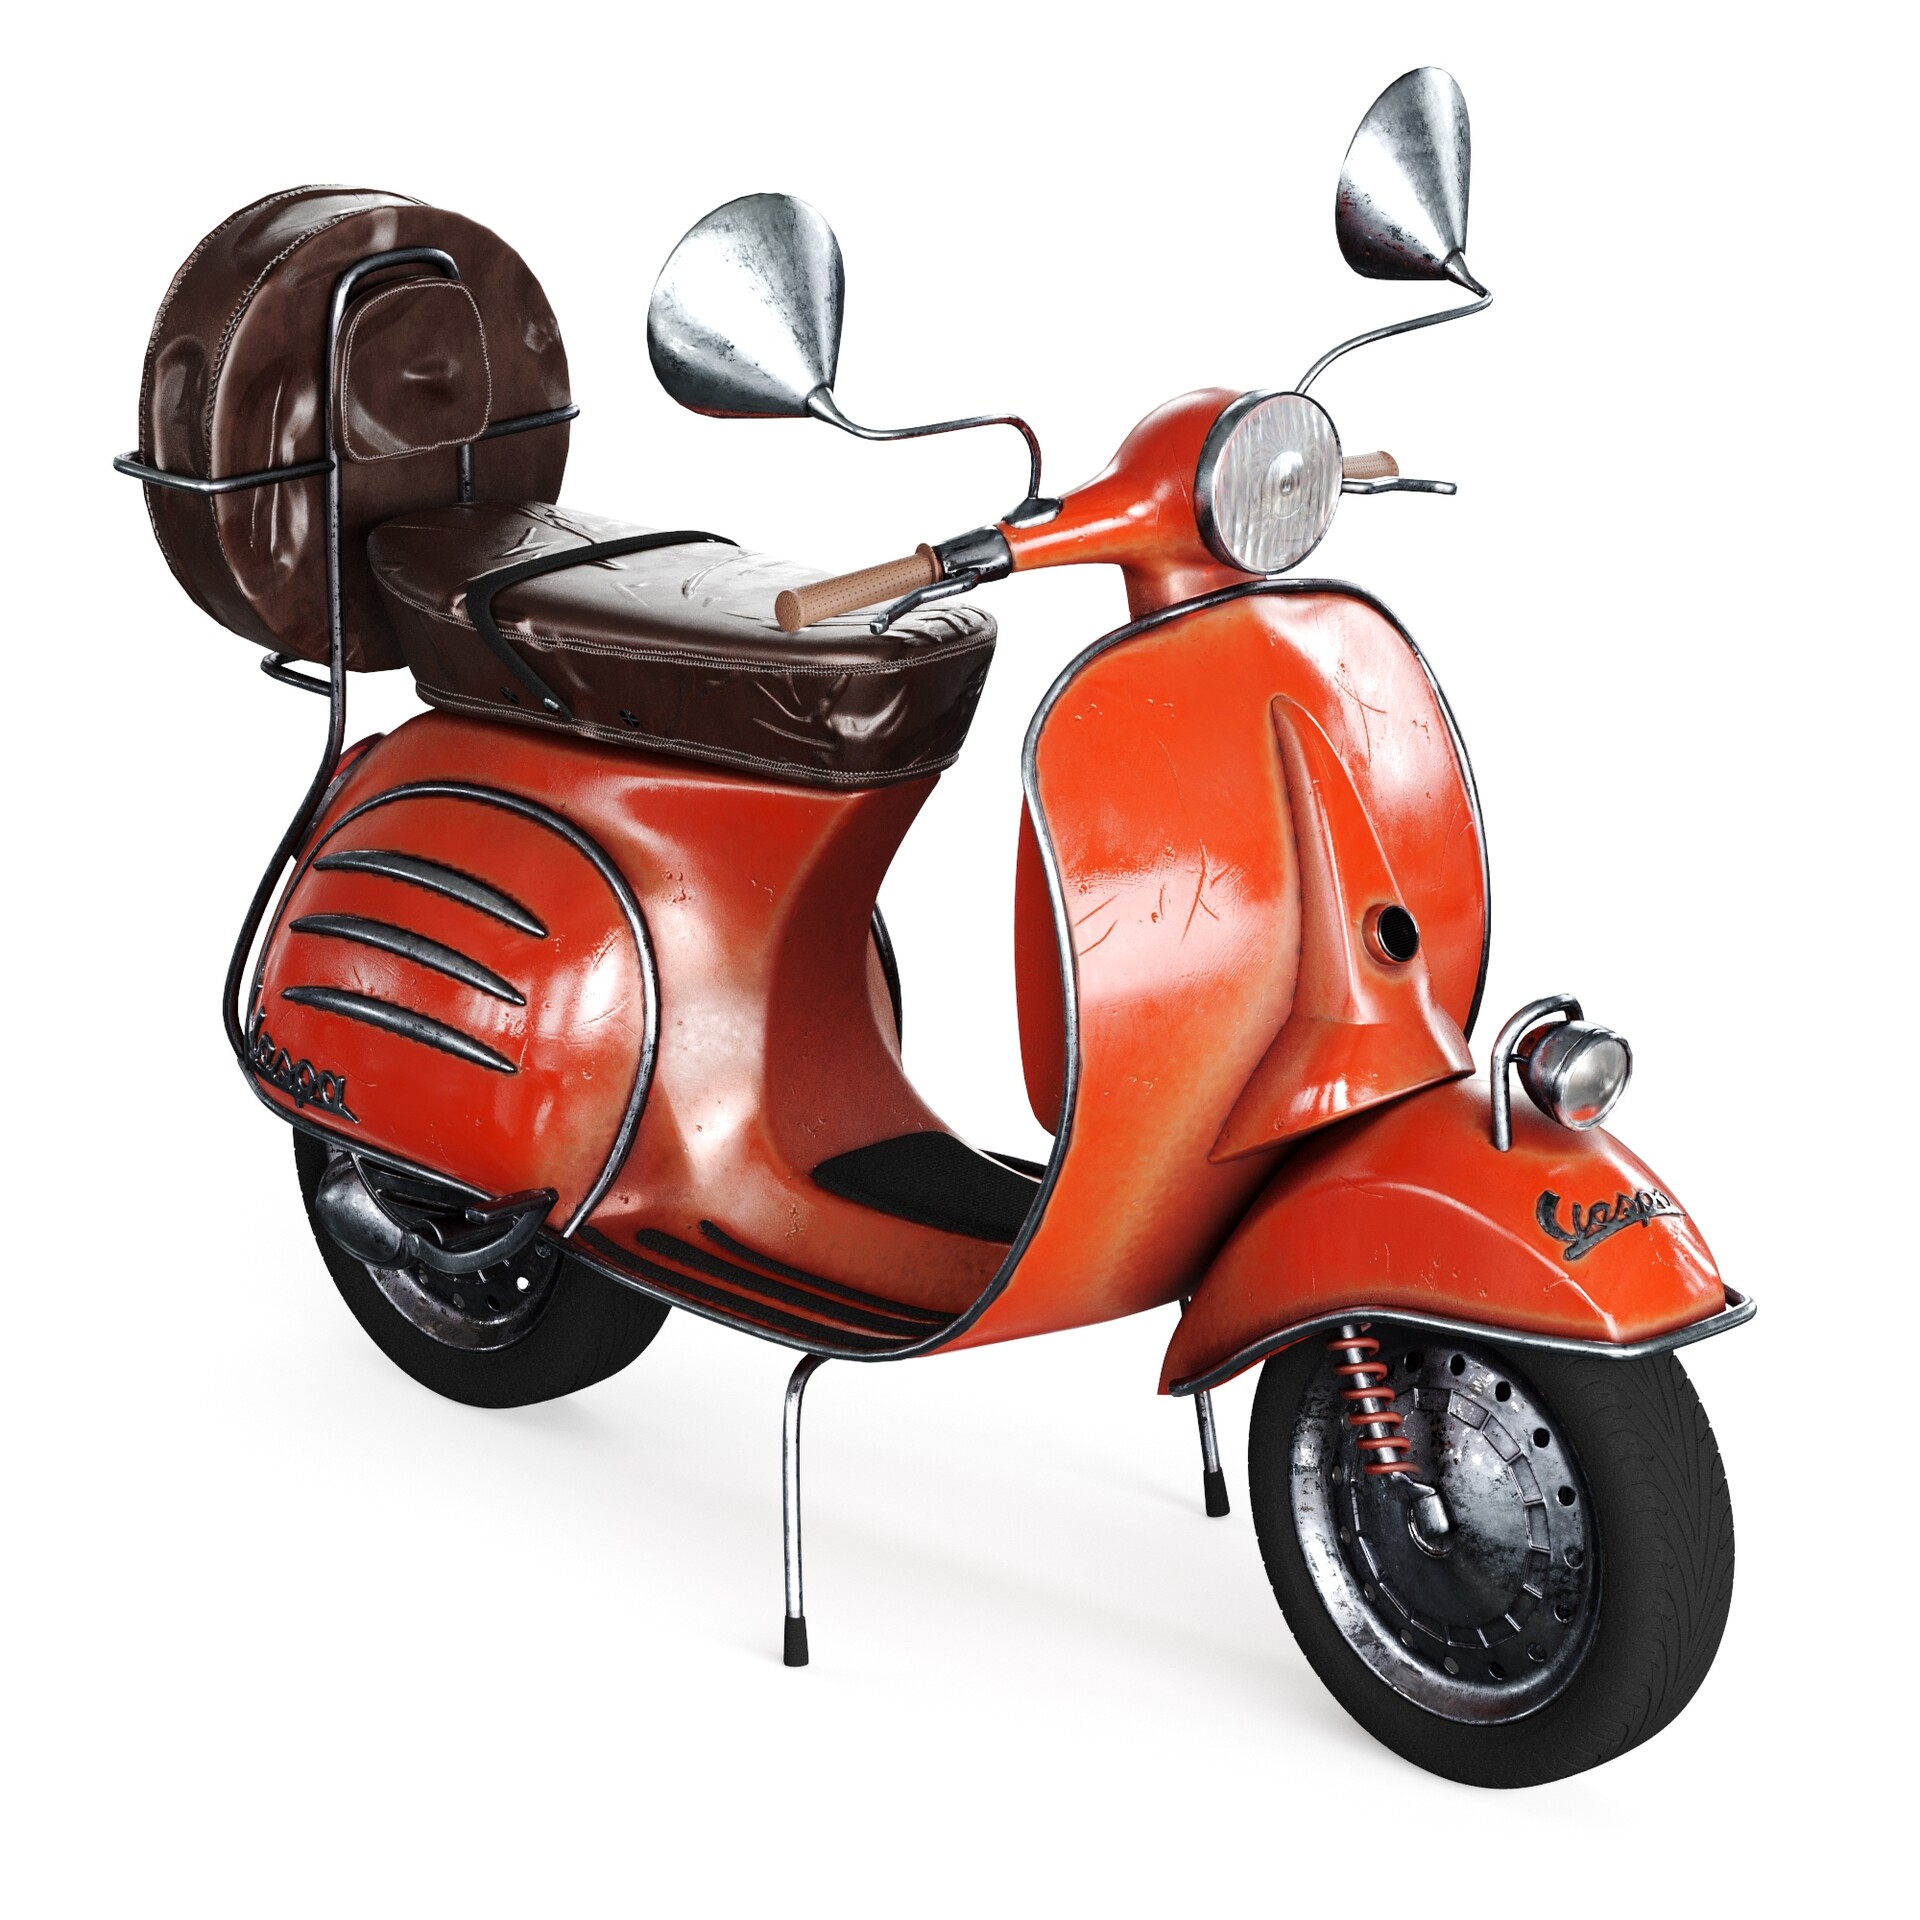 Motocicleta Vespa Napoli 150 CC Velocidad máxima 105 Km/h